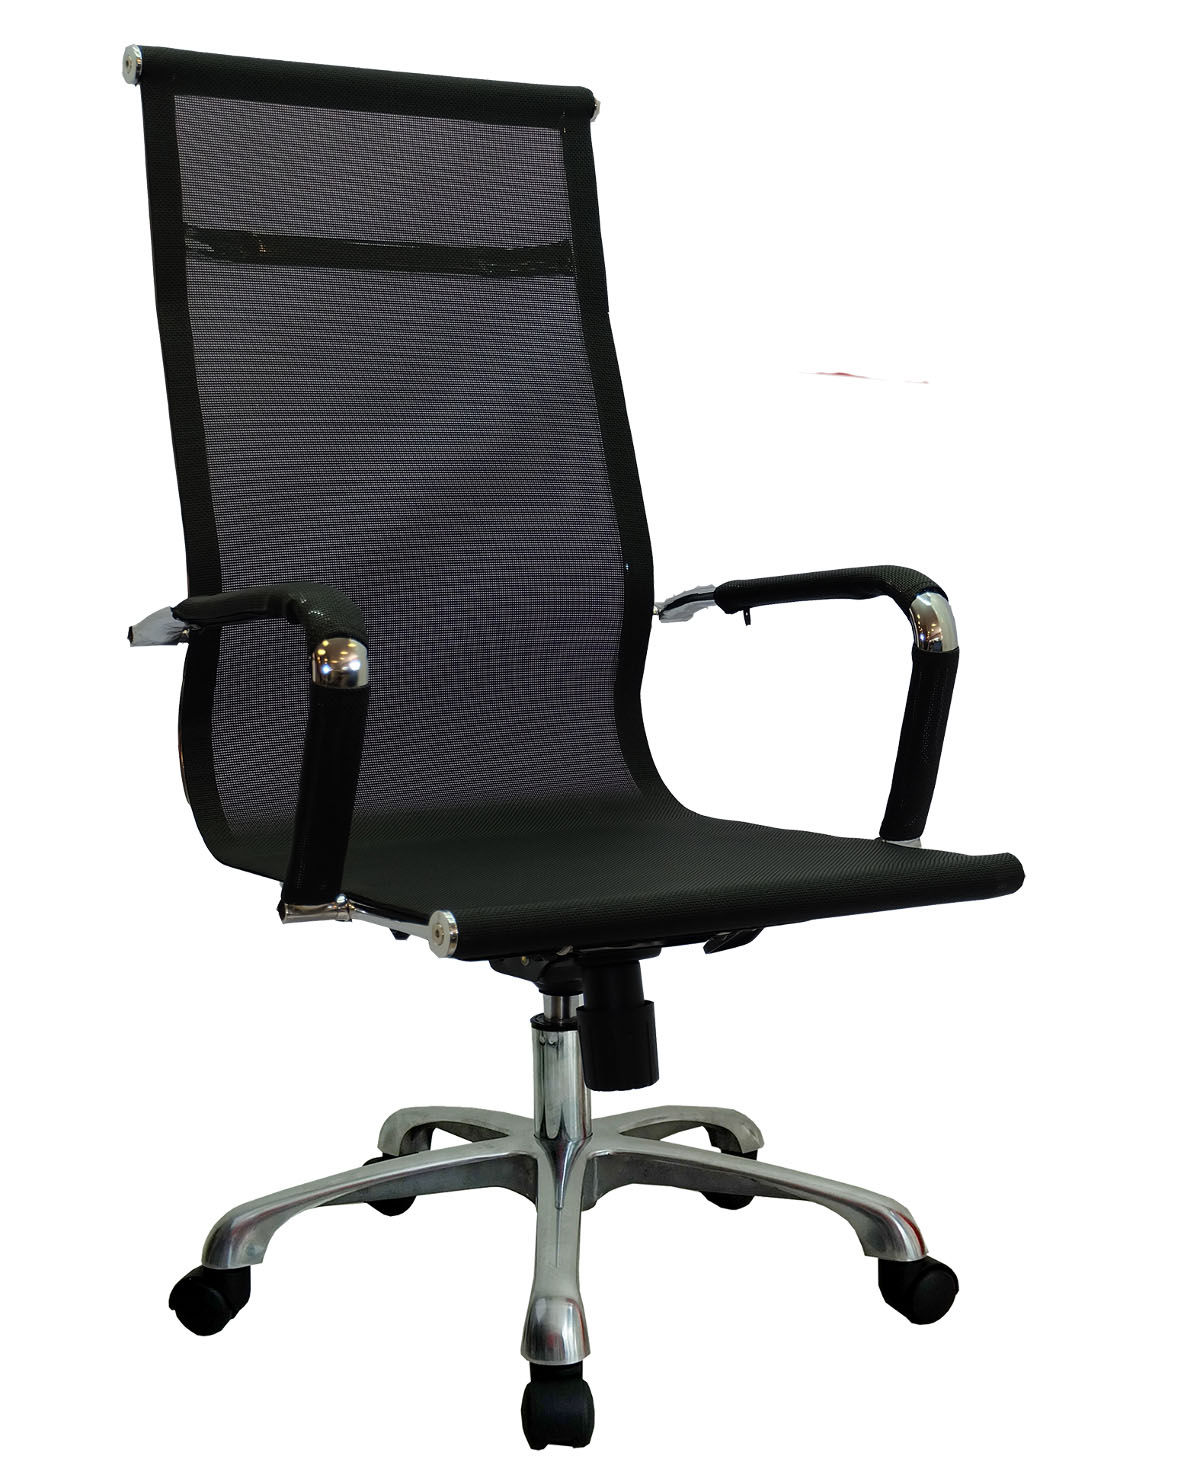 Super Chair เก้าอี้สำนักงาน ผู้บริหาร PREMIUM - JW527 H ขาอลูมิเนียม